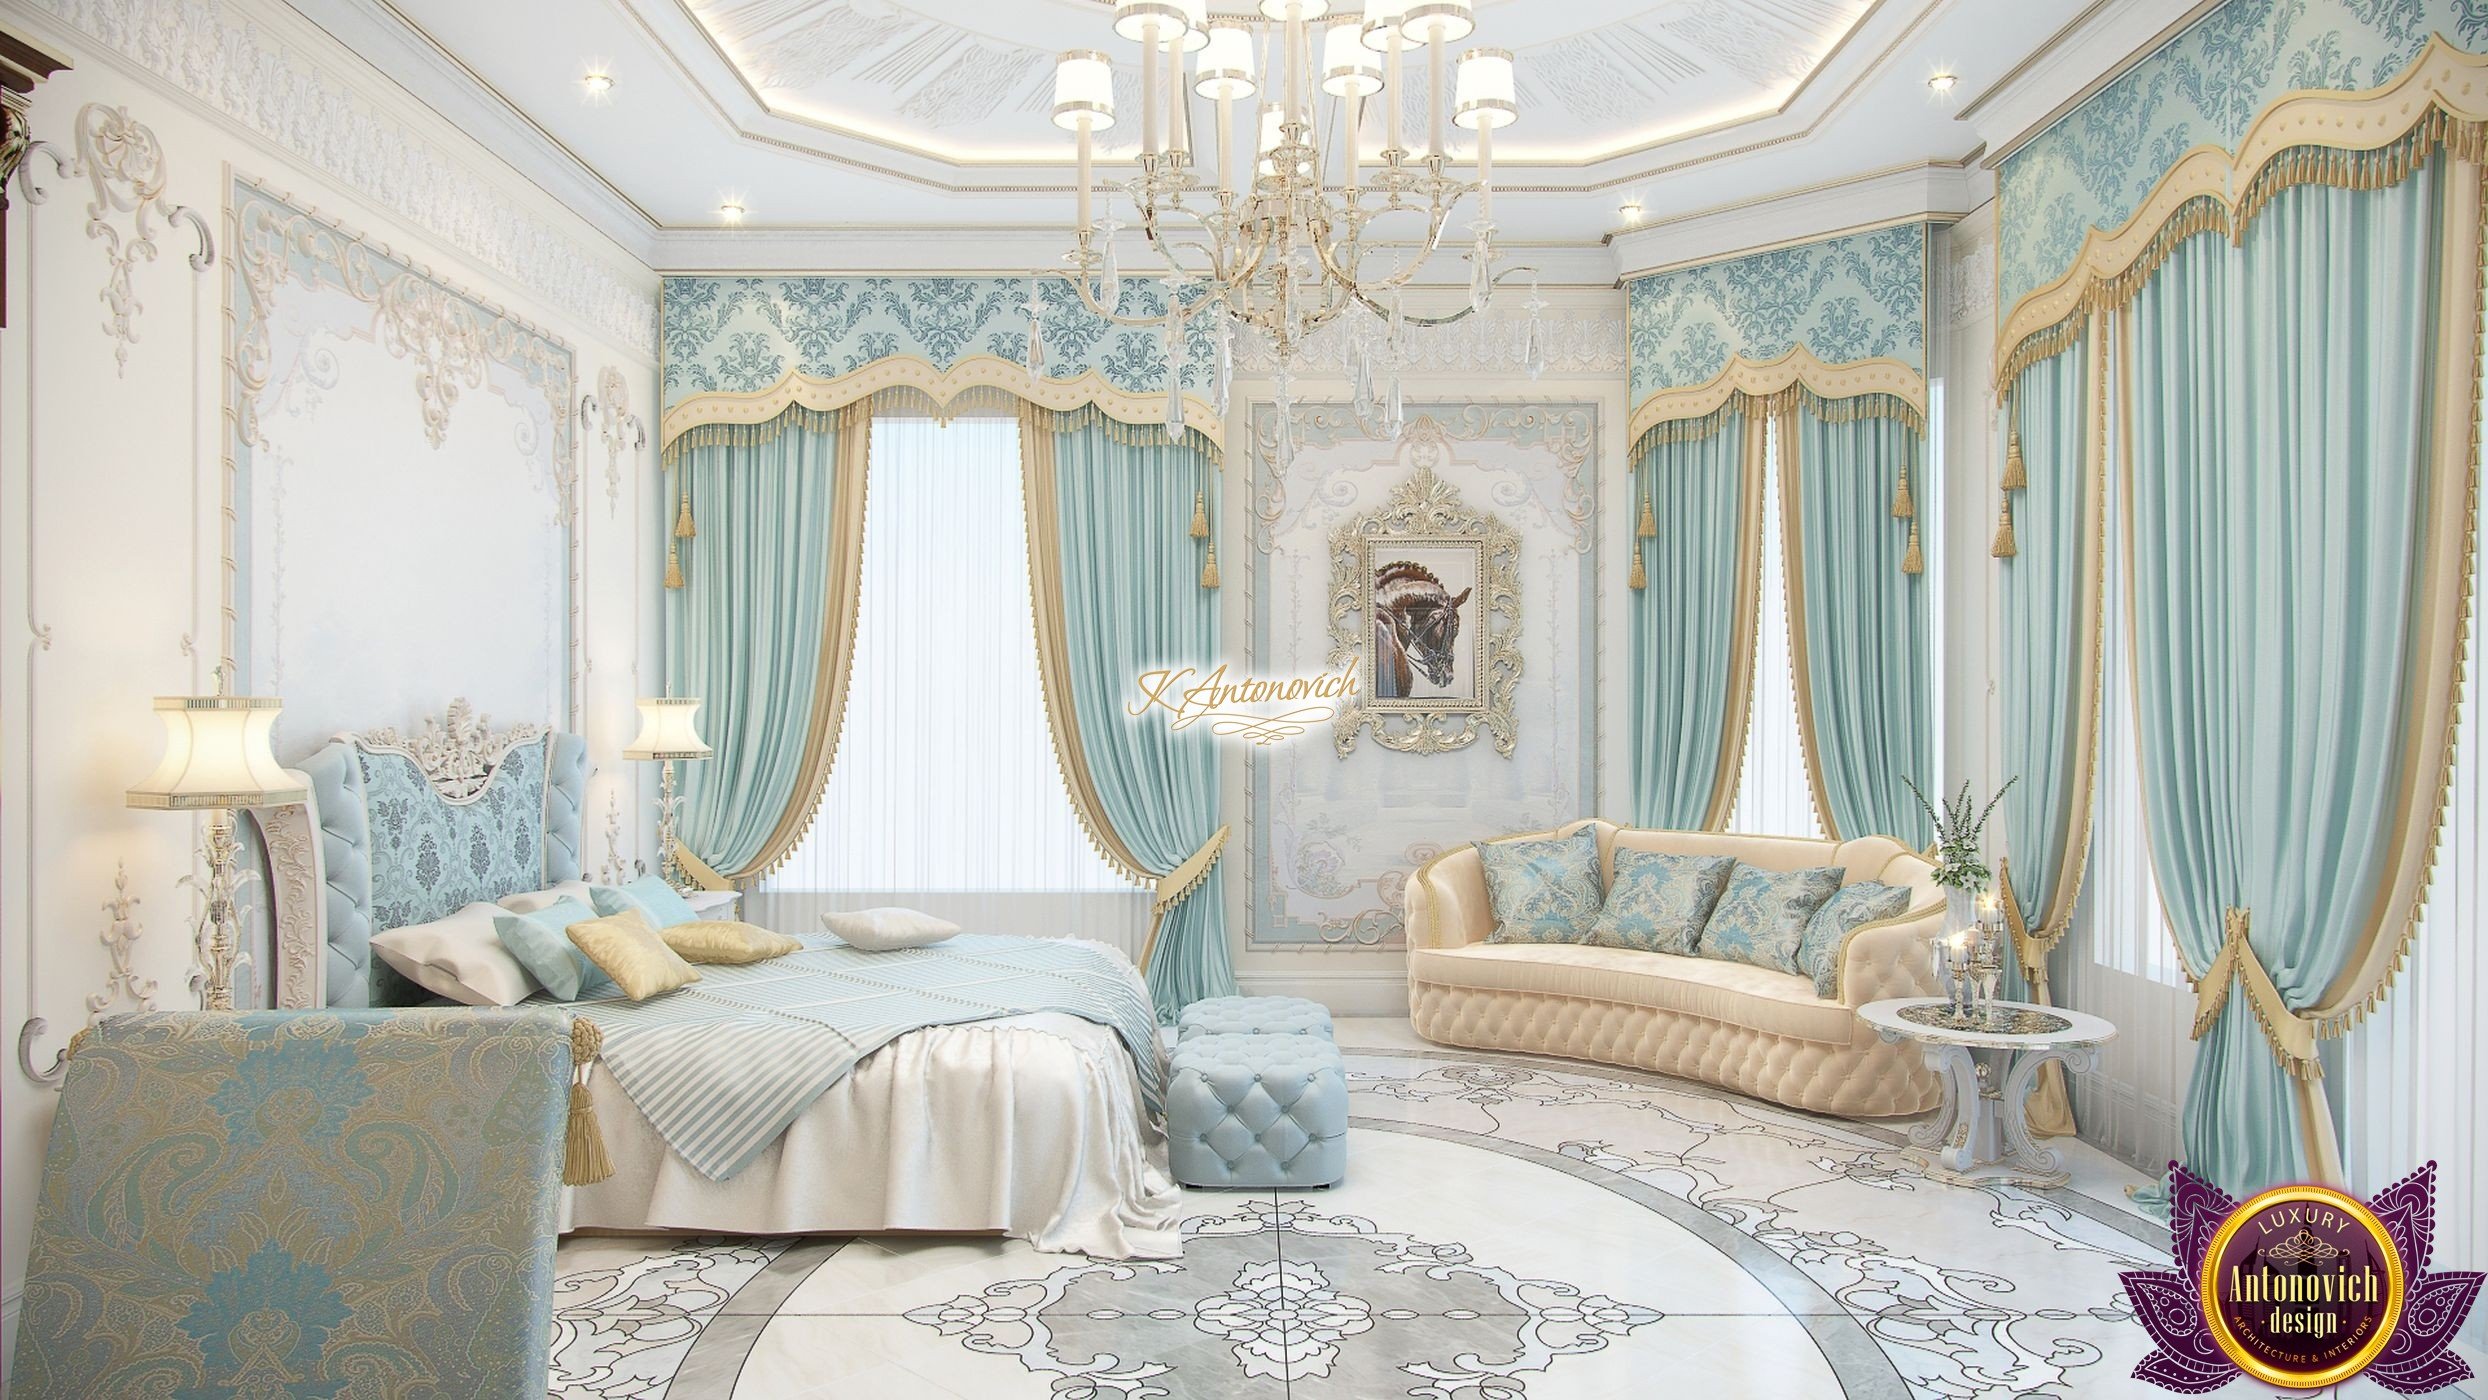 Luxury Master Bedroom Images - BEST HOME DESIGN IDEAS